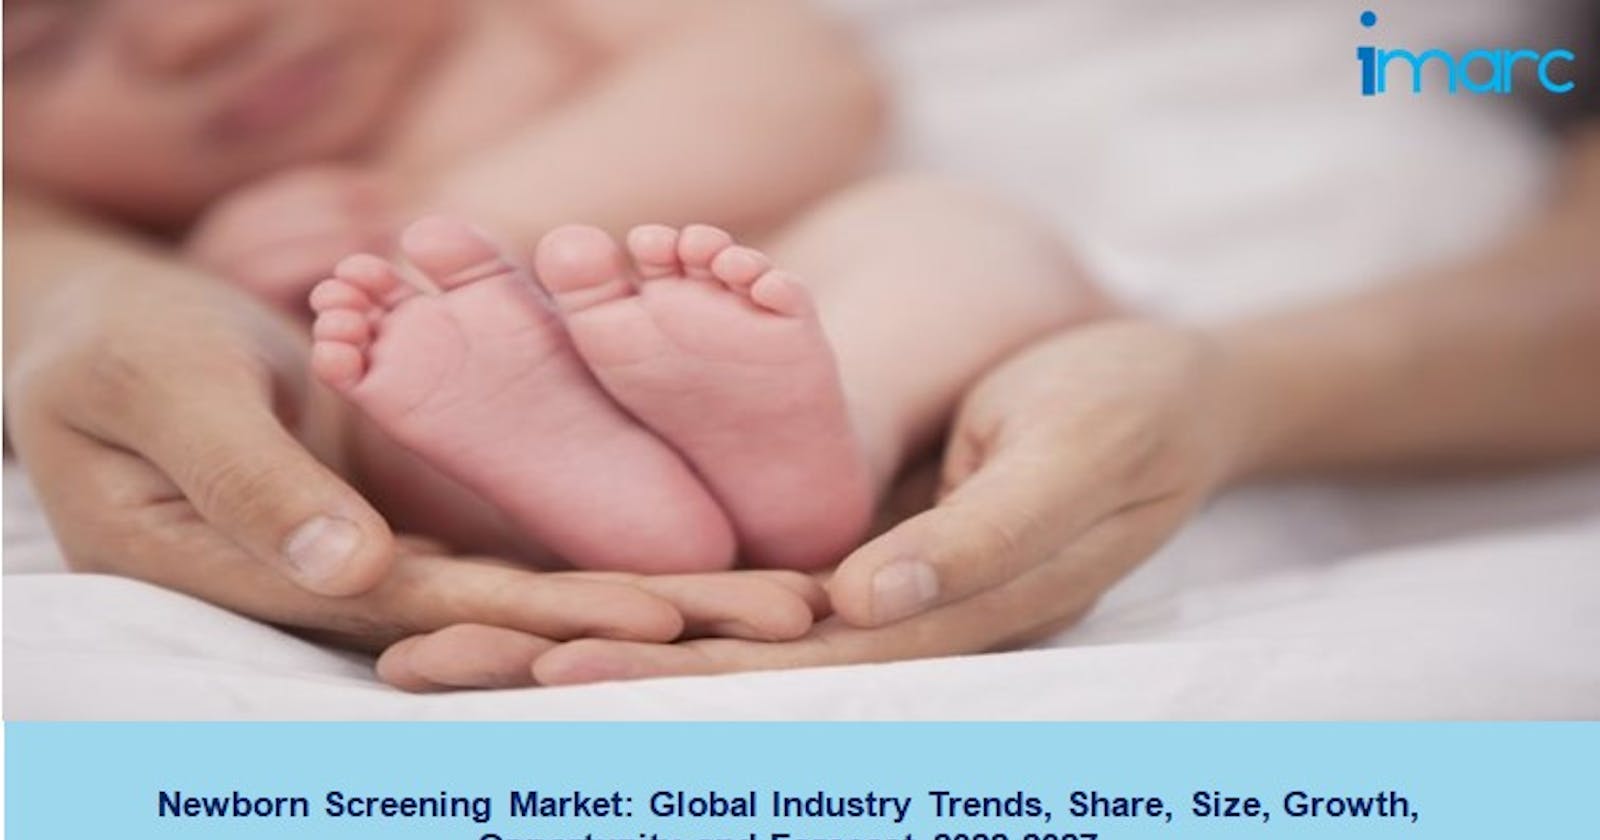 Newborn Screening Market 2022, Scope, Size, Analysis and Growth Report 2027